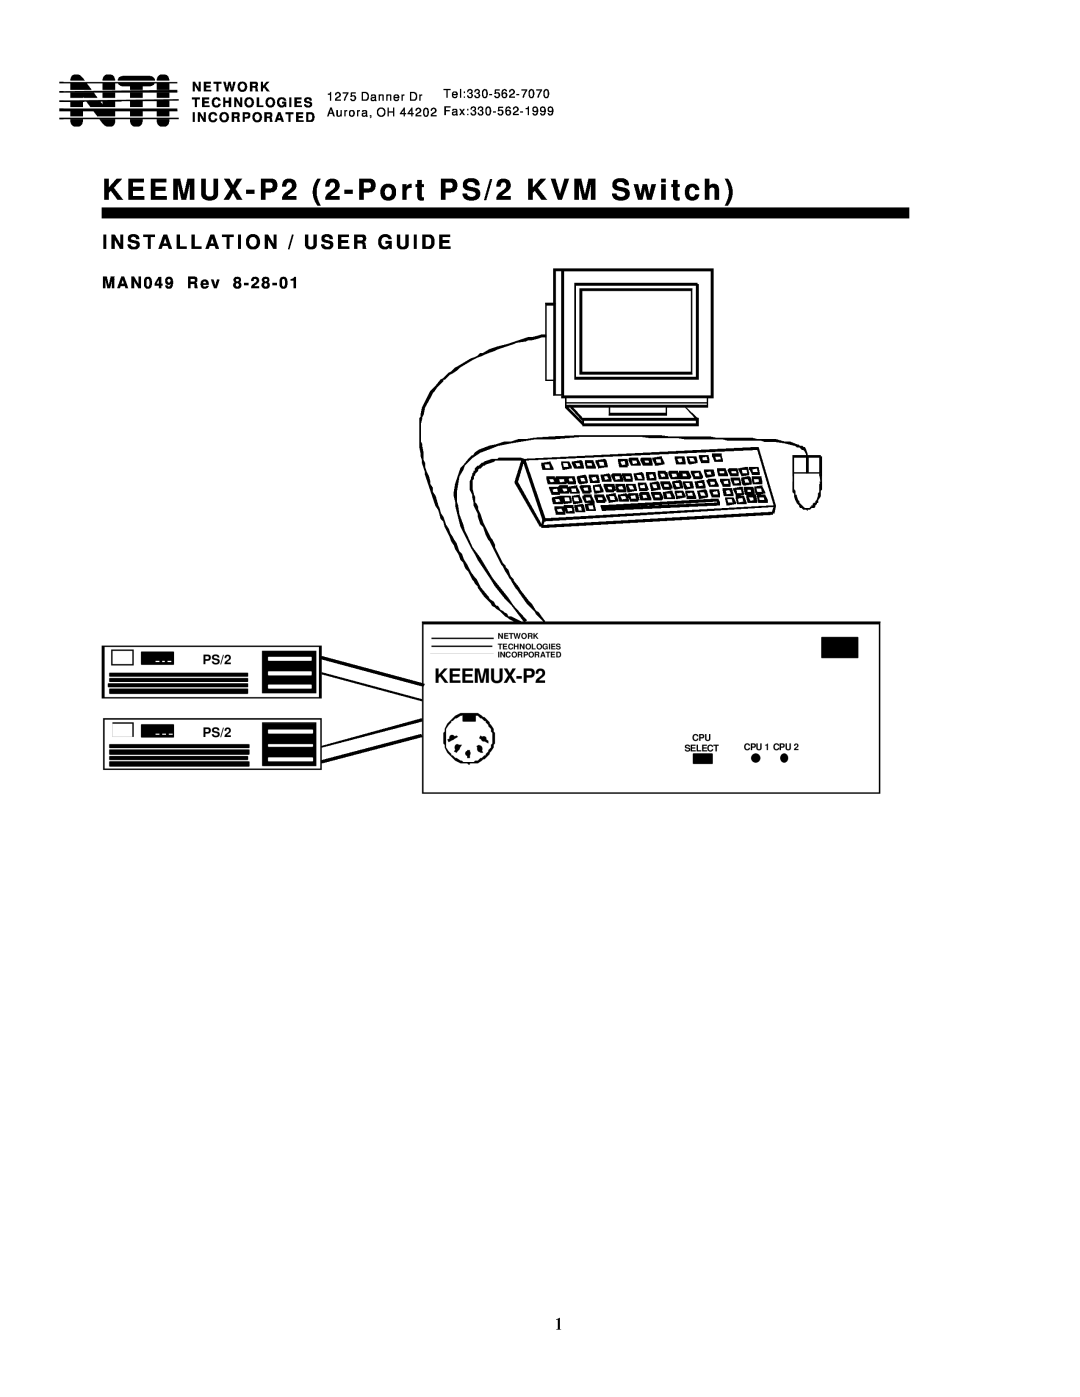 Network Technologies manual MAN049 Rev 8 - 28, KEEMUX - P2 2 - Port PS/2 KVM Switch, KEEMUX-P2, N E T W O R K, Network 